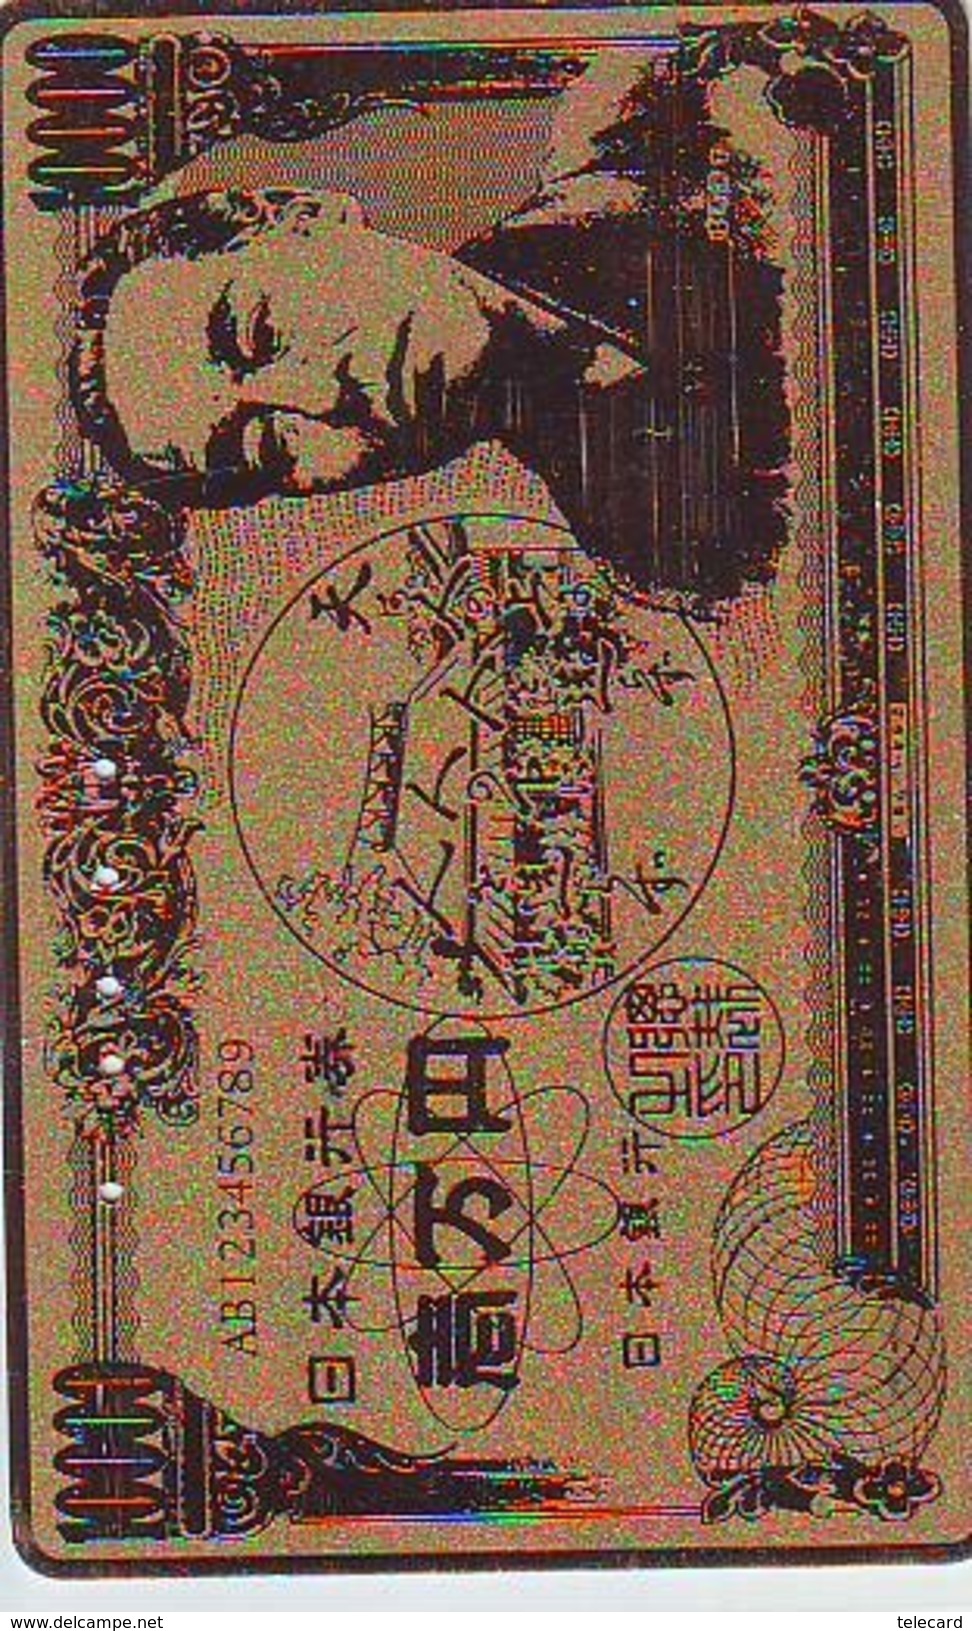 Télécarte JAPON * Billet De Banque (155) Notes Money Banknote Bill * Bankbiljet PHONECARD Japan * Coins * MUNTEN * - Timbres & Monnaies